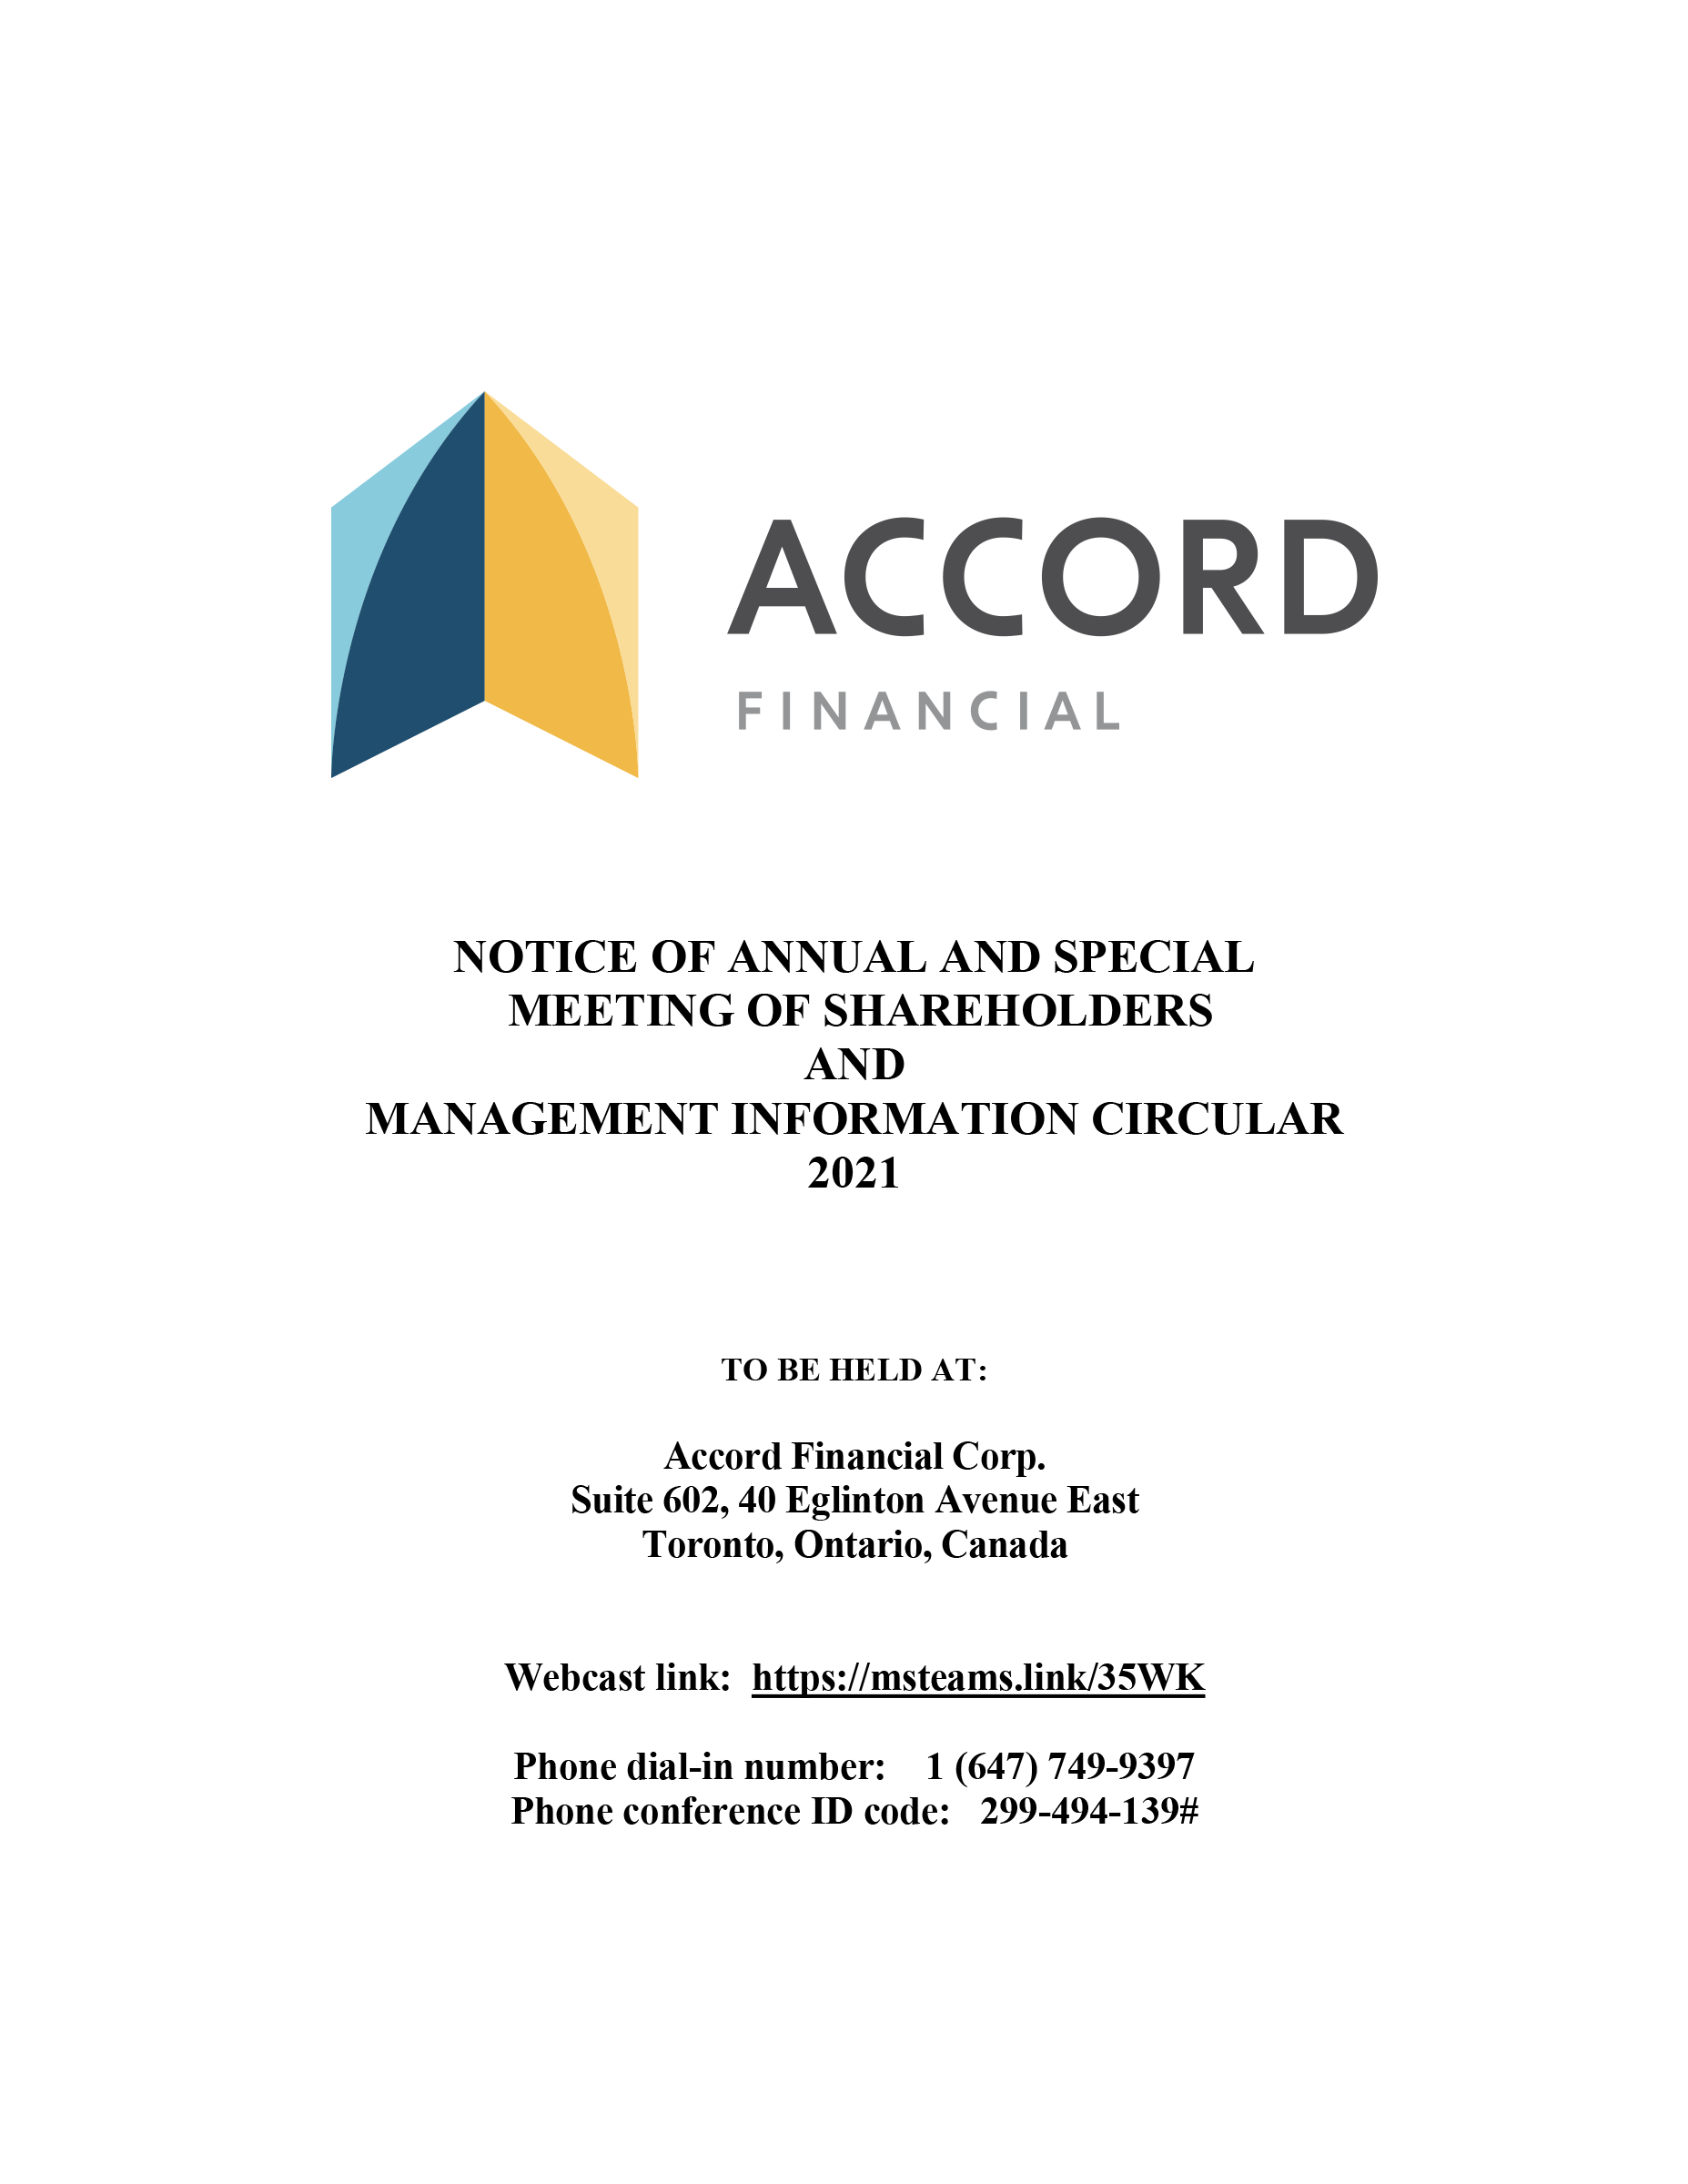 Accord management information circular 2021